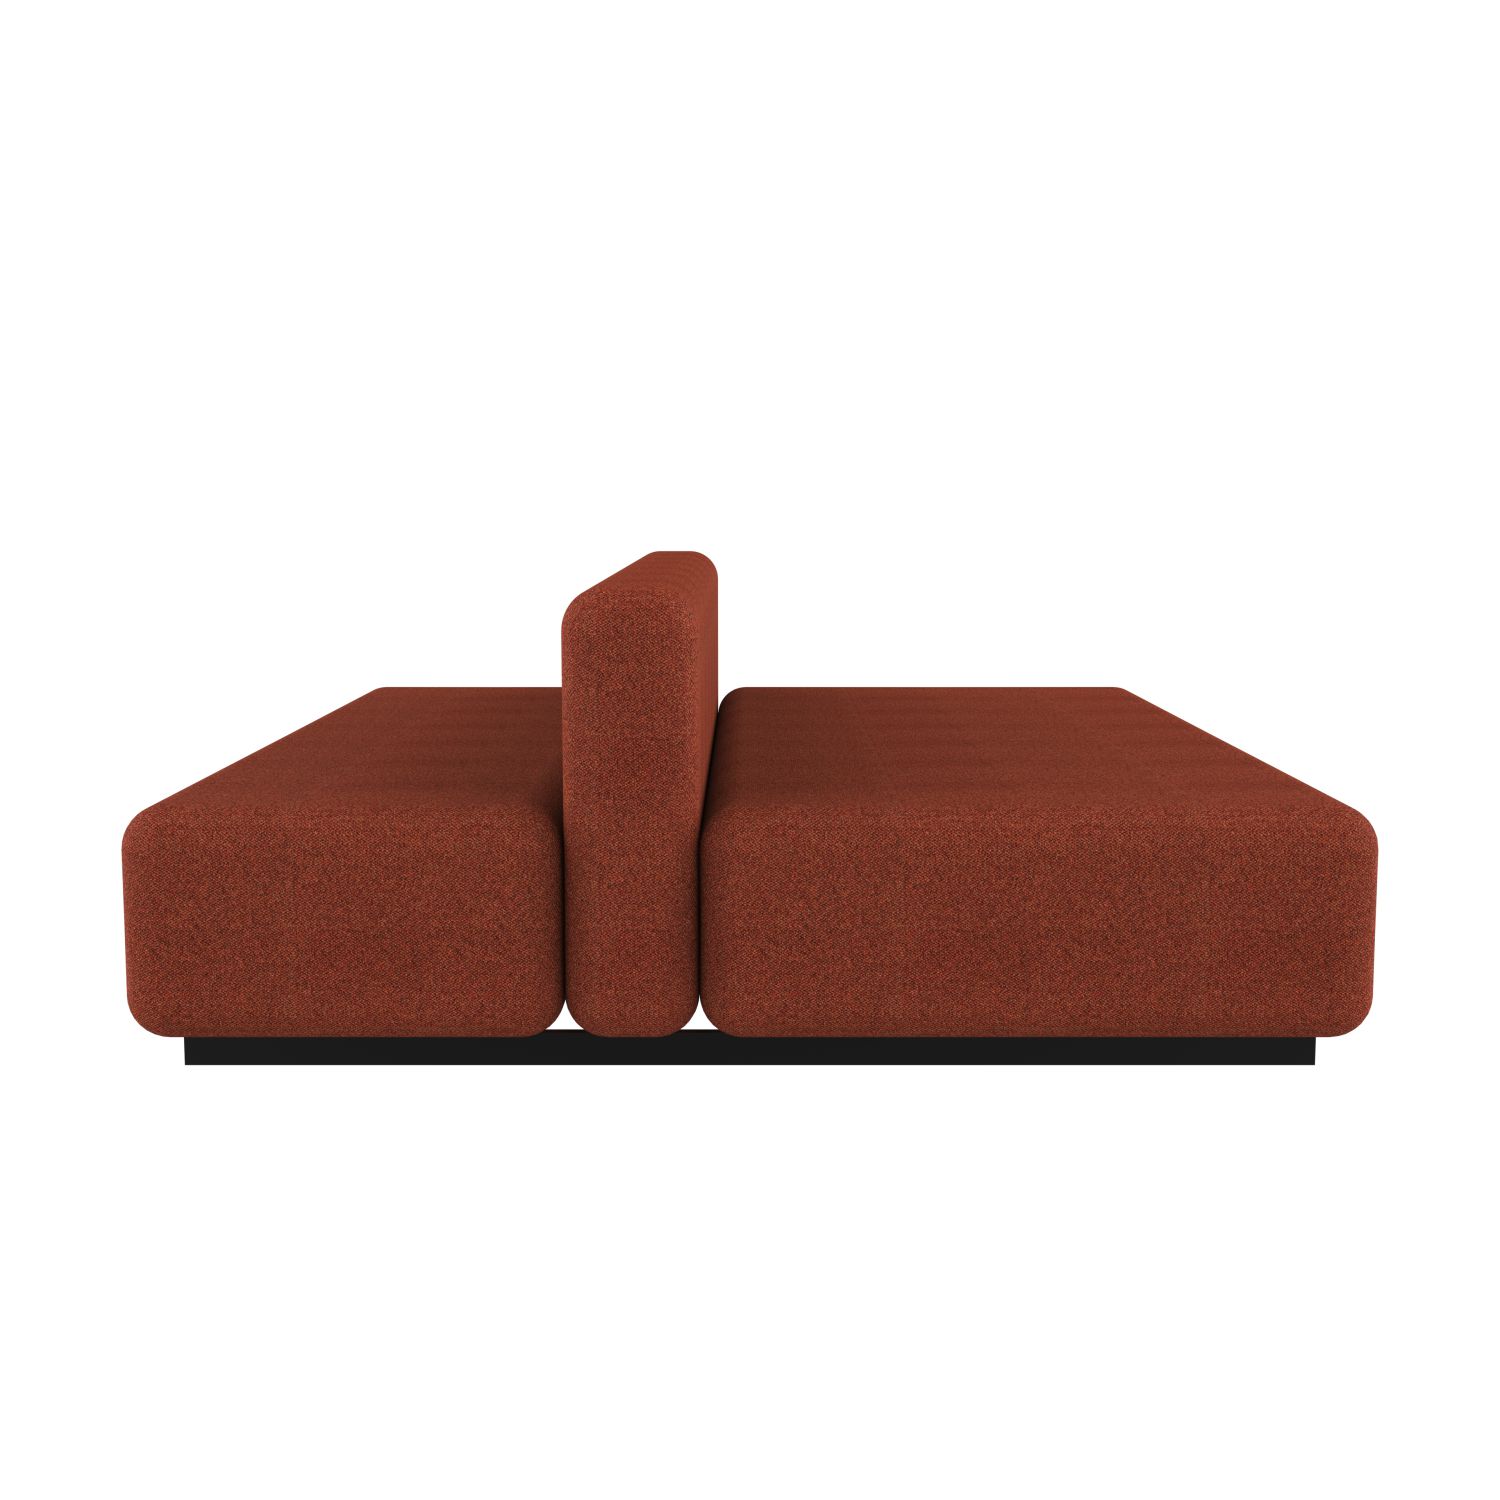 lensvelt fabio novembre balance duo sofa without armrest moss clay brown 65 black ral9005